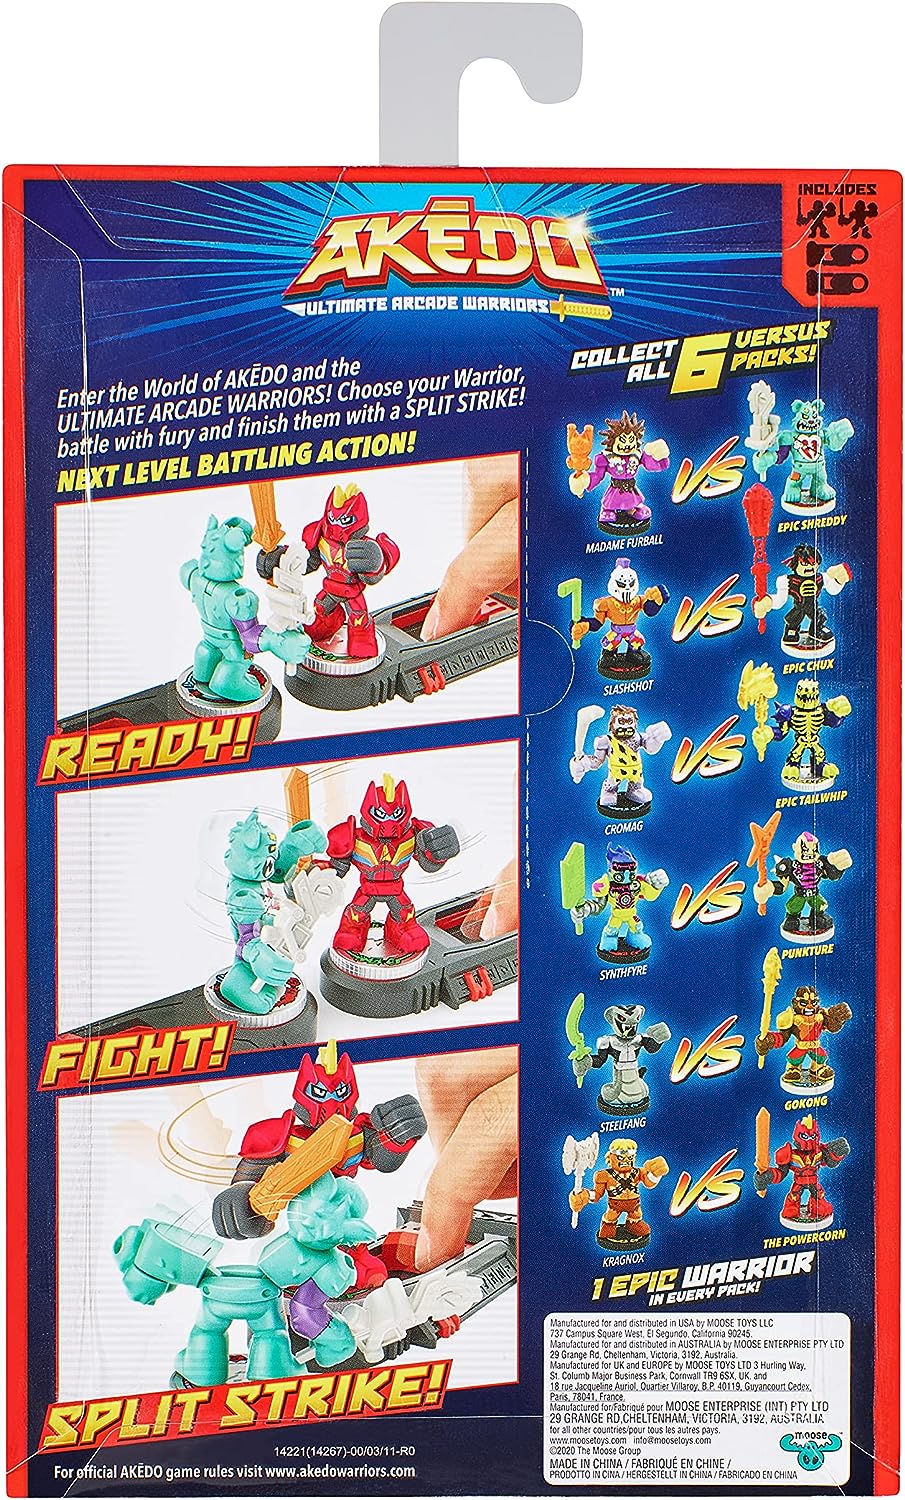 Akedo 14267 Ultimate Arcade Warriors Versus Pack EPIC SHREDDY VS MADAME FURBALL Mini Battling Action Figures